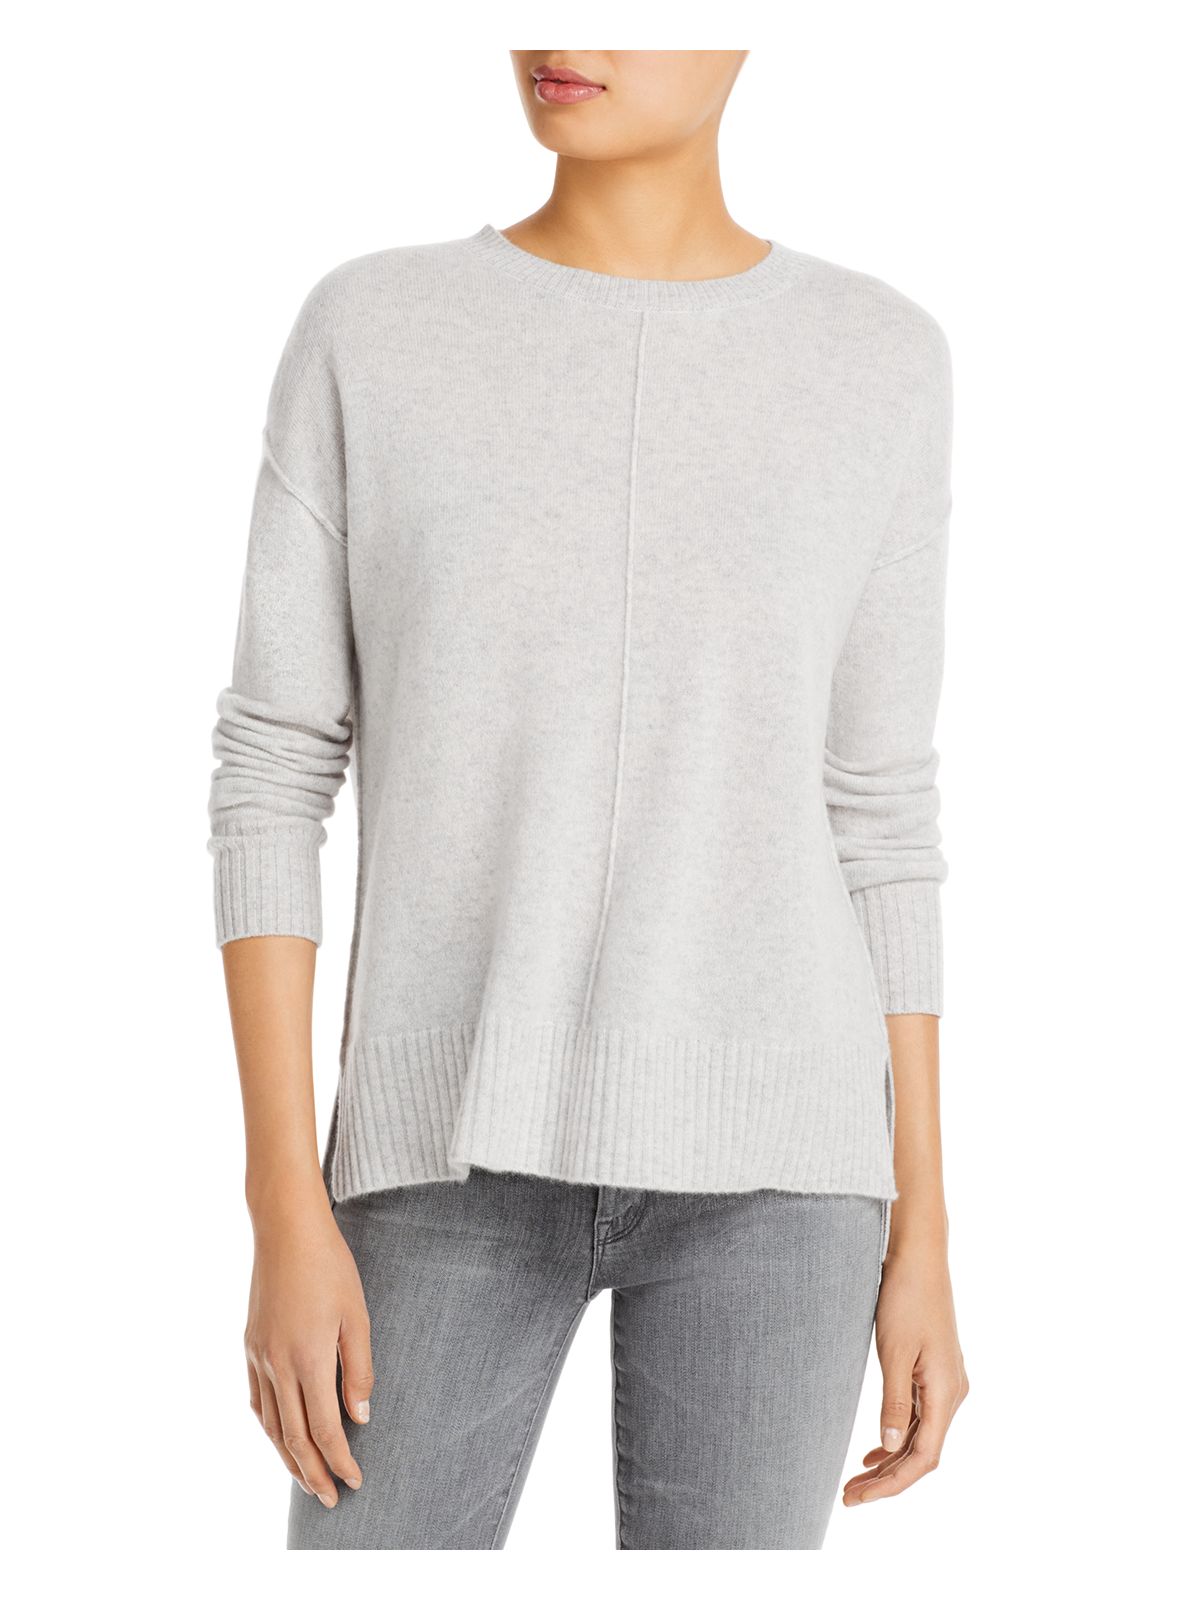 Designer Brand Womens Gray Cashmere Long Sleeve Crew Neck Wear To Work Sweater XXL